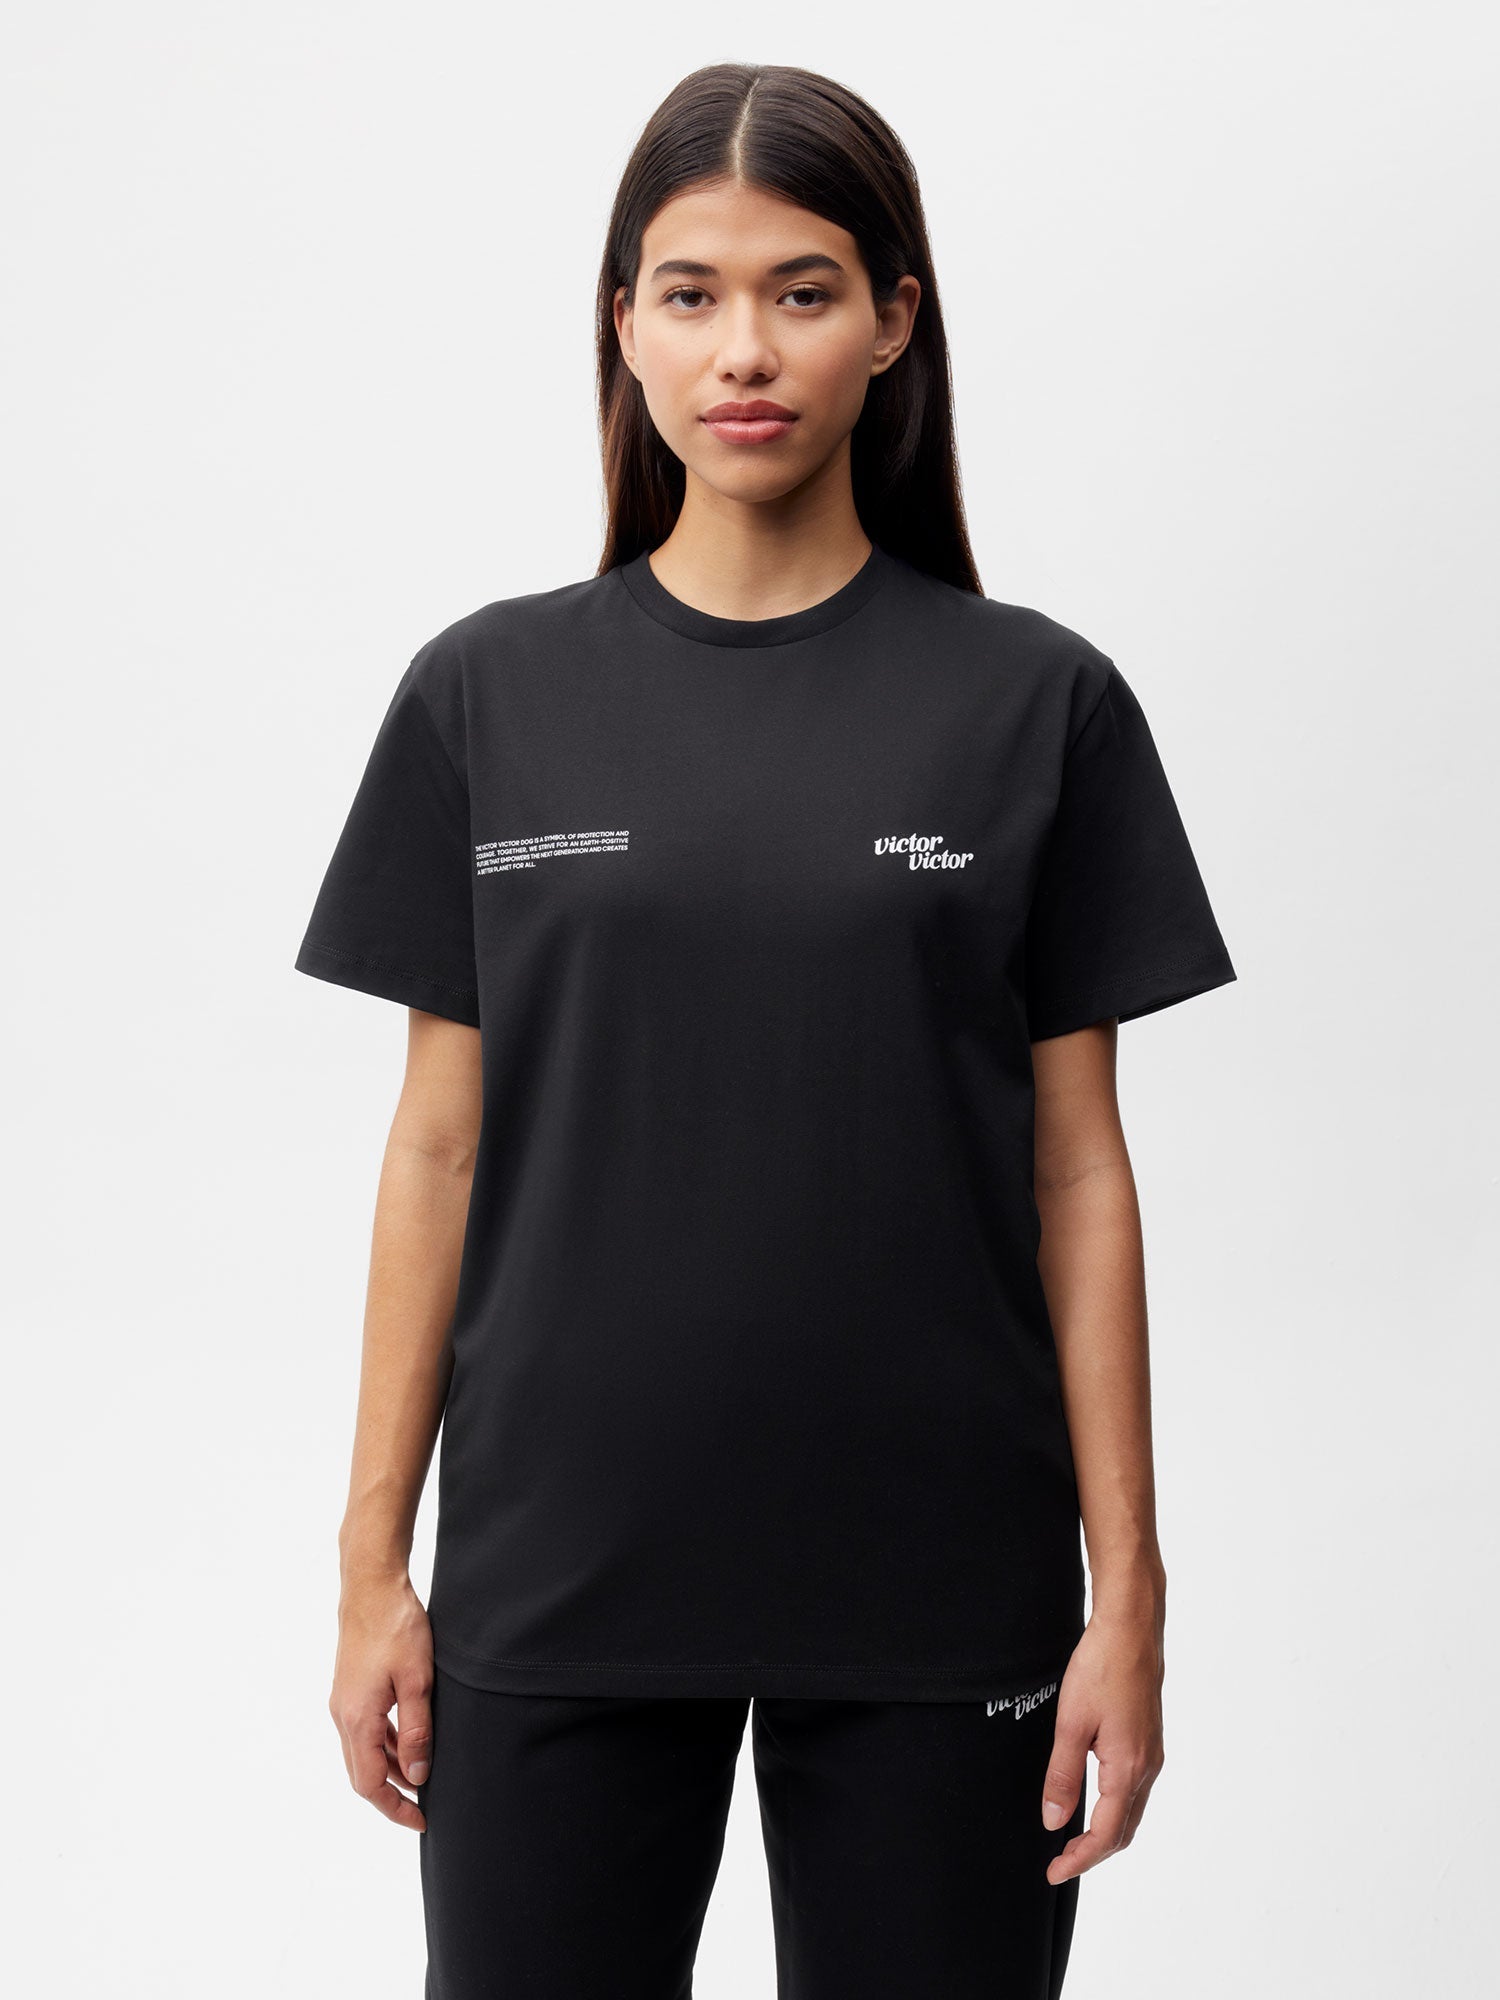 Pangaia-VictorVictor-Organic-Cotton-T-Shirt-Revised-Dog-Face-Black-Female-1